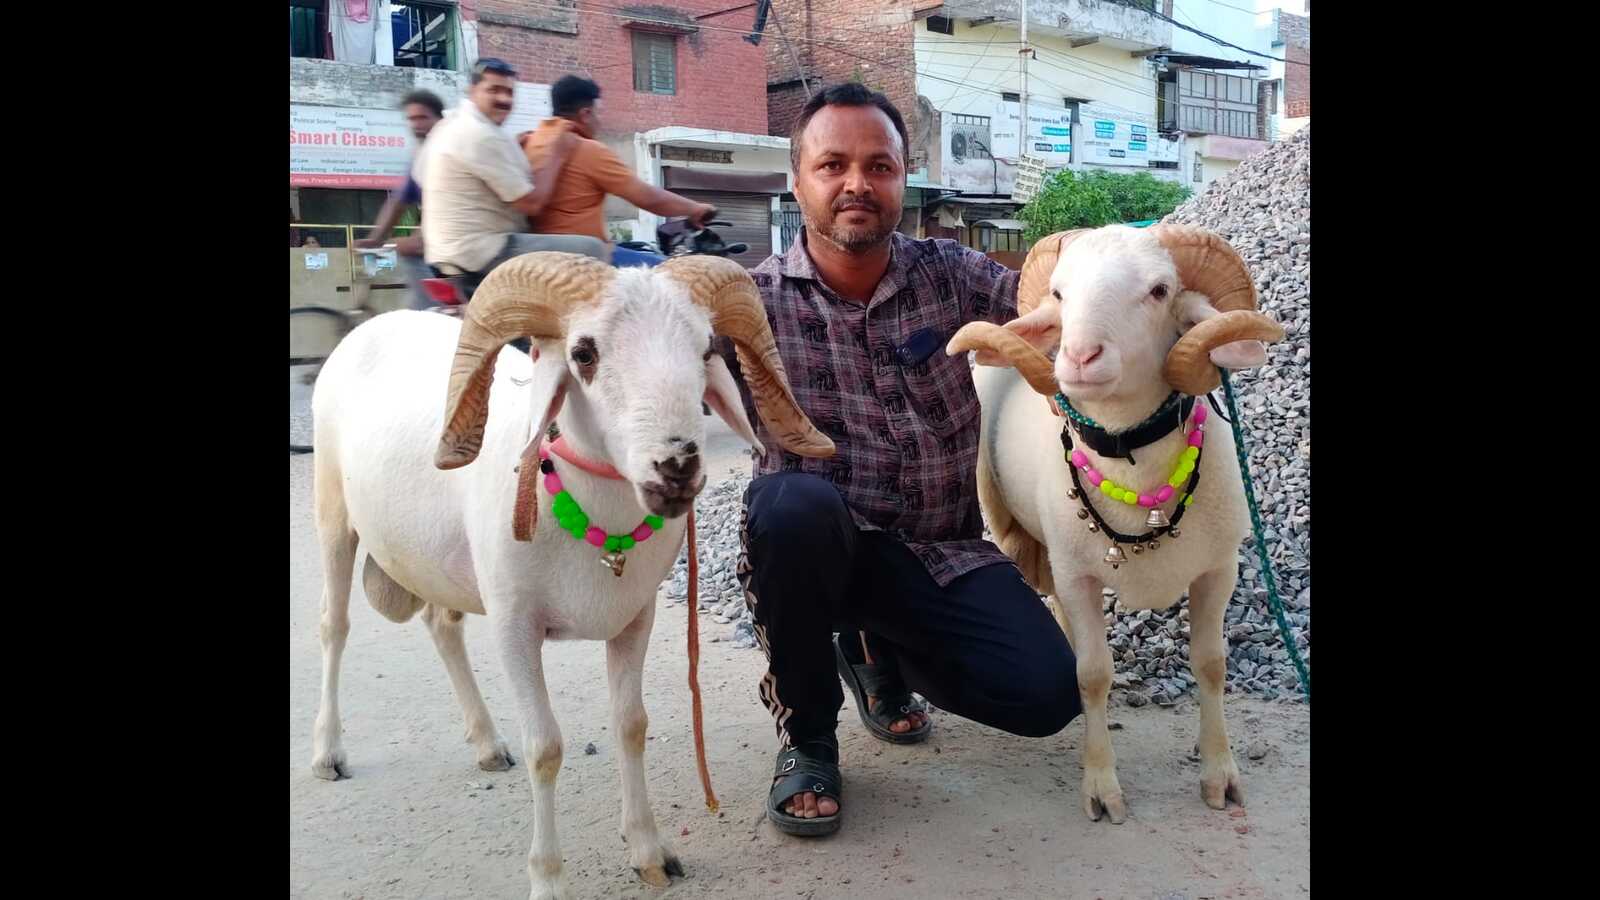 In Prayagraj, pair of rams from Delhi attracting attention - Hindustan Times